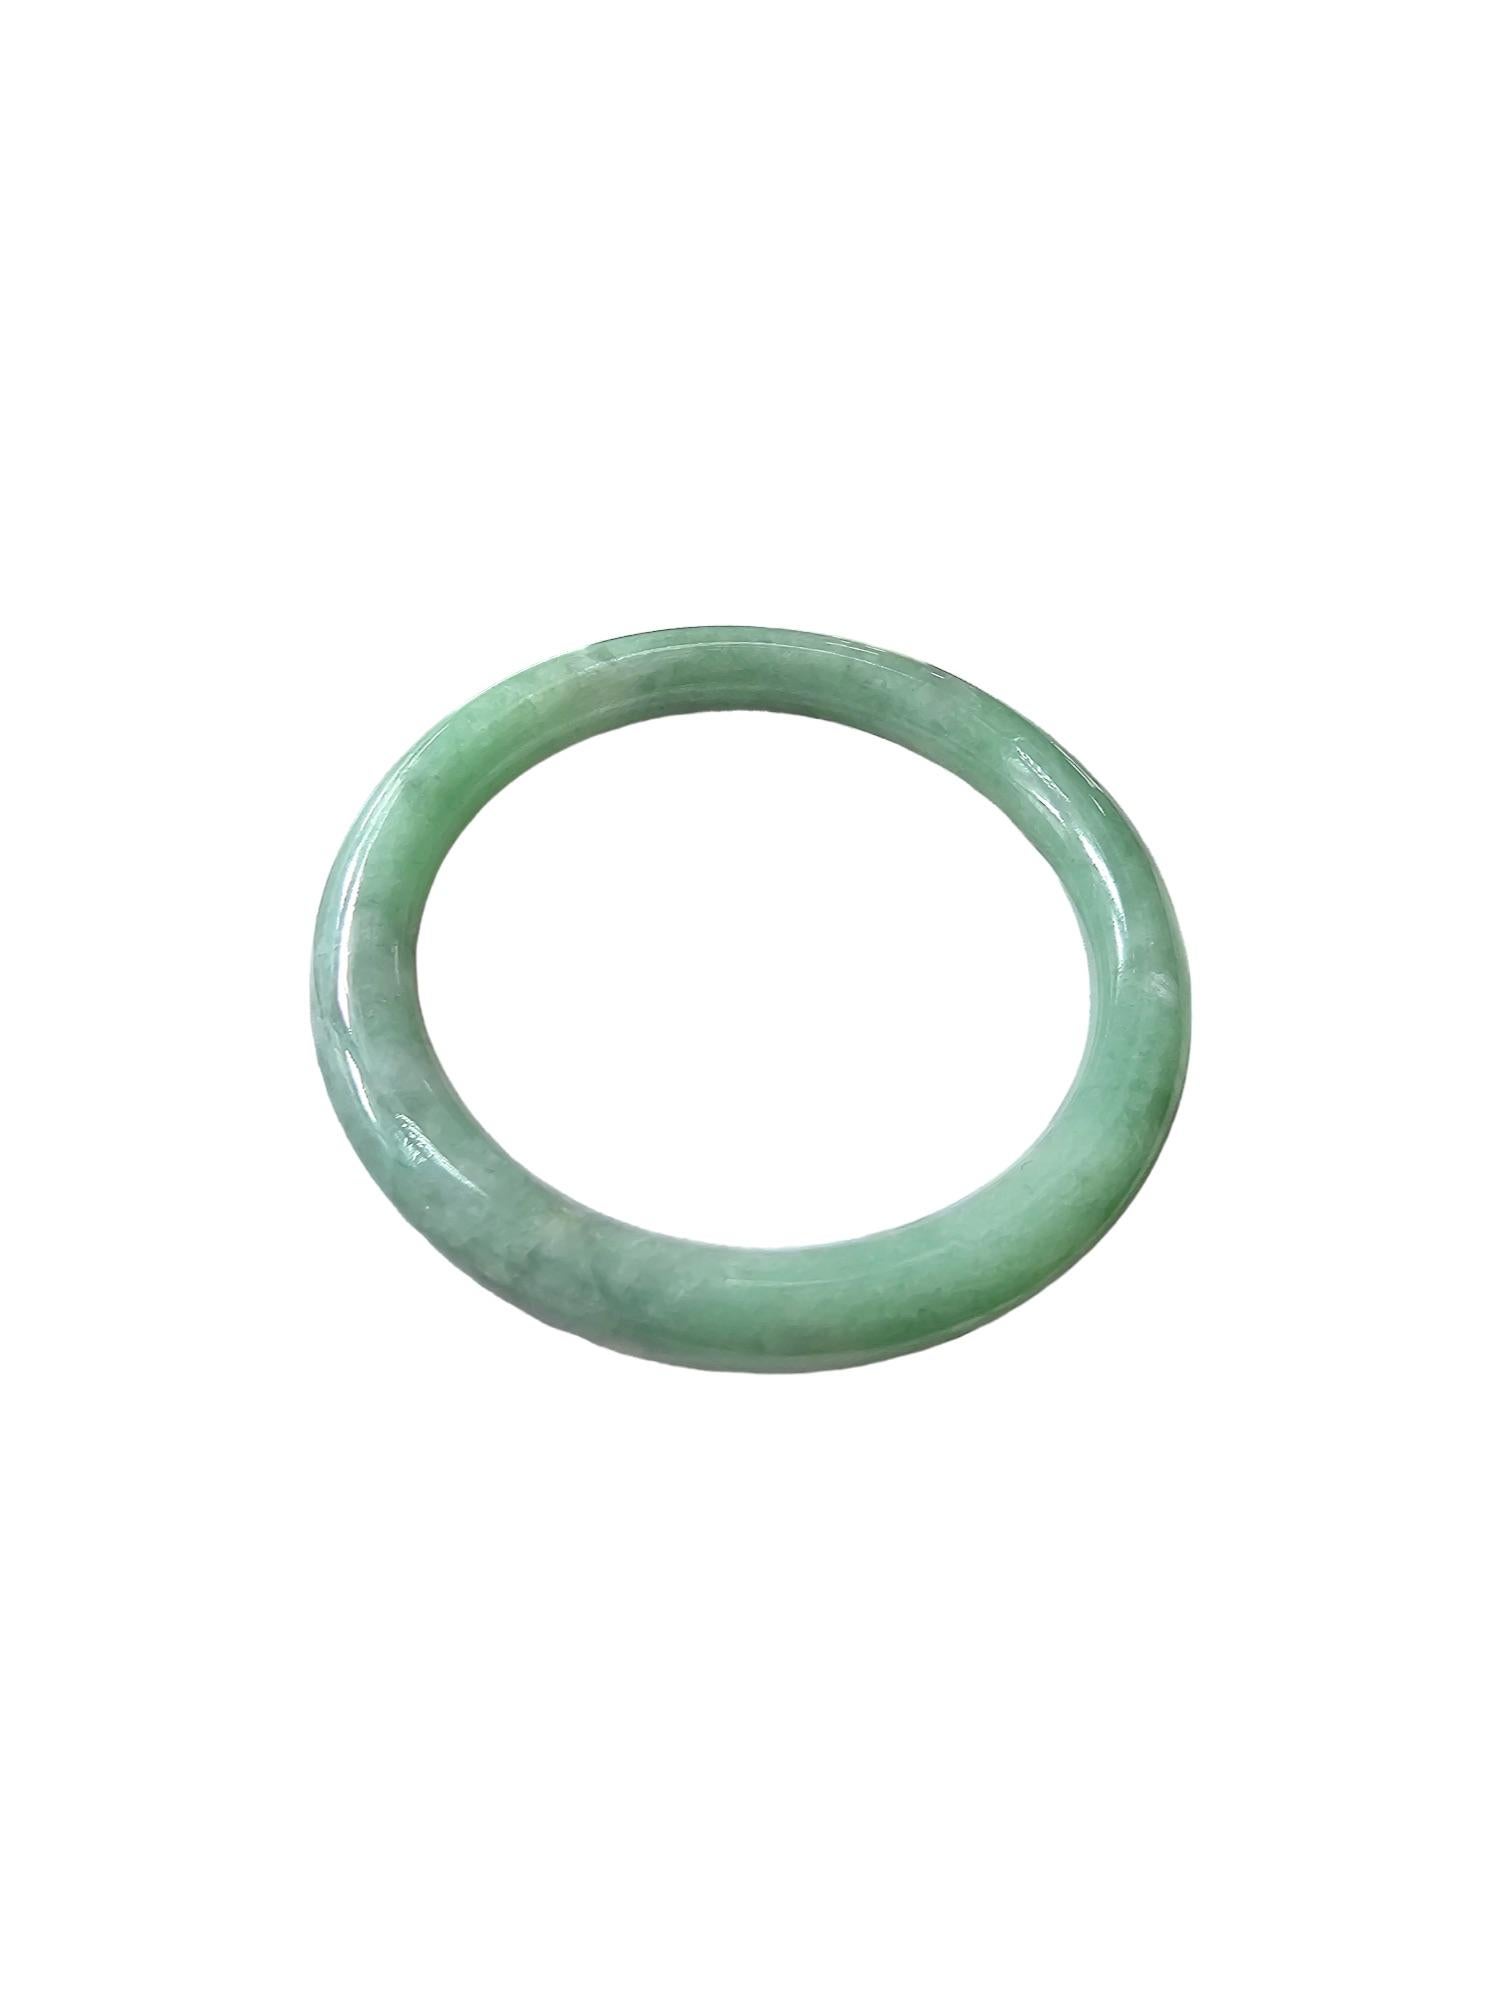 Earth's Burmese A-Jade Bangle Bracelet Green Jadeite 08809 For Sale 1